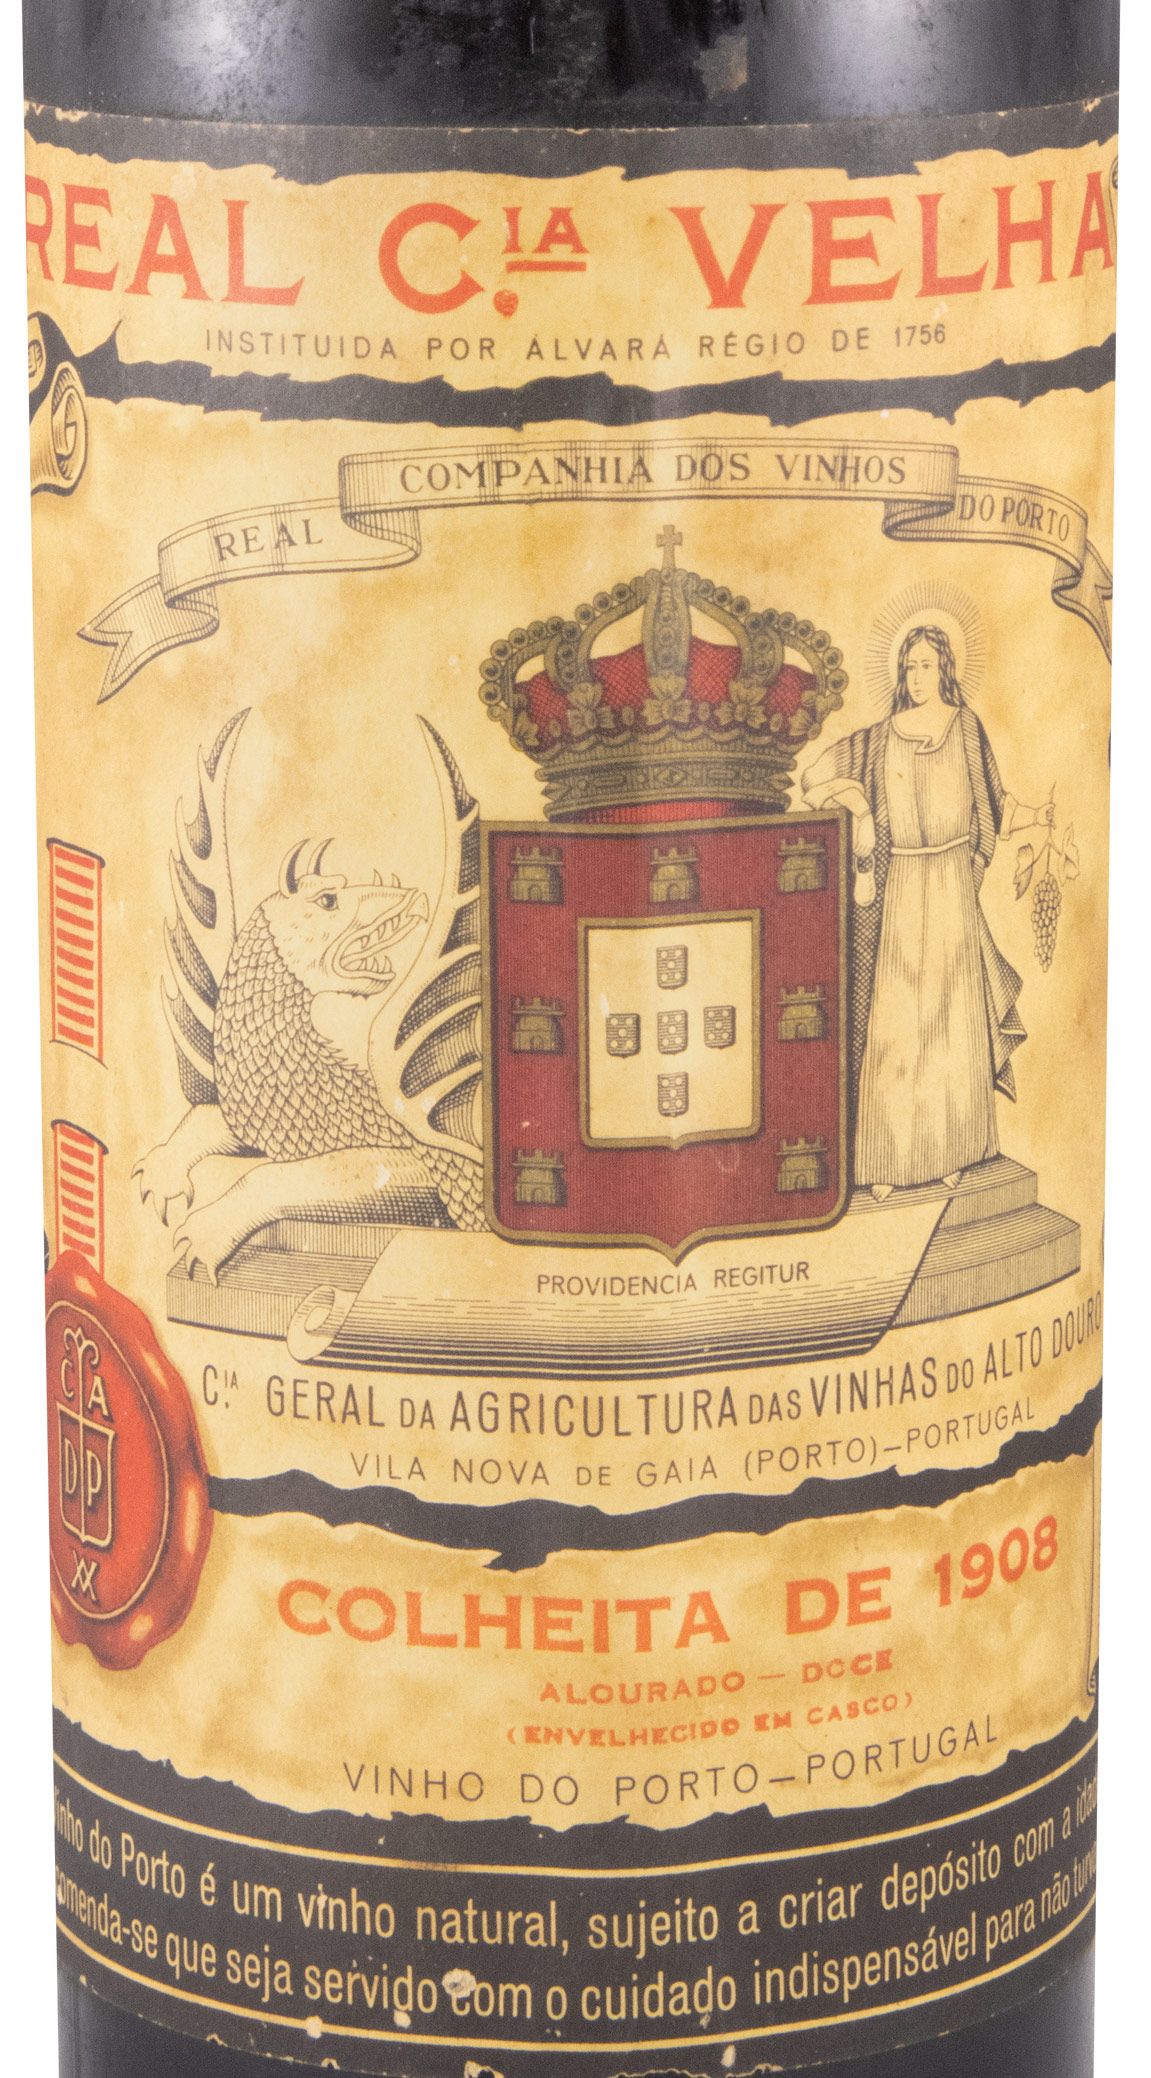 1908 Real Companhia Velha Colheita Porto (rótulo de papel)